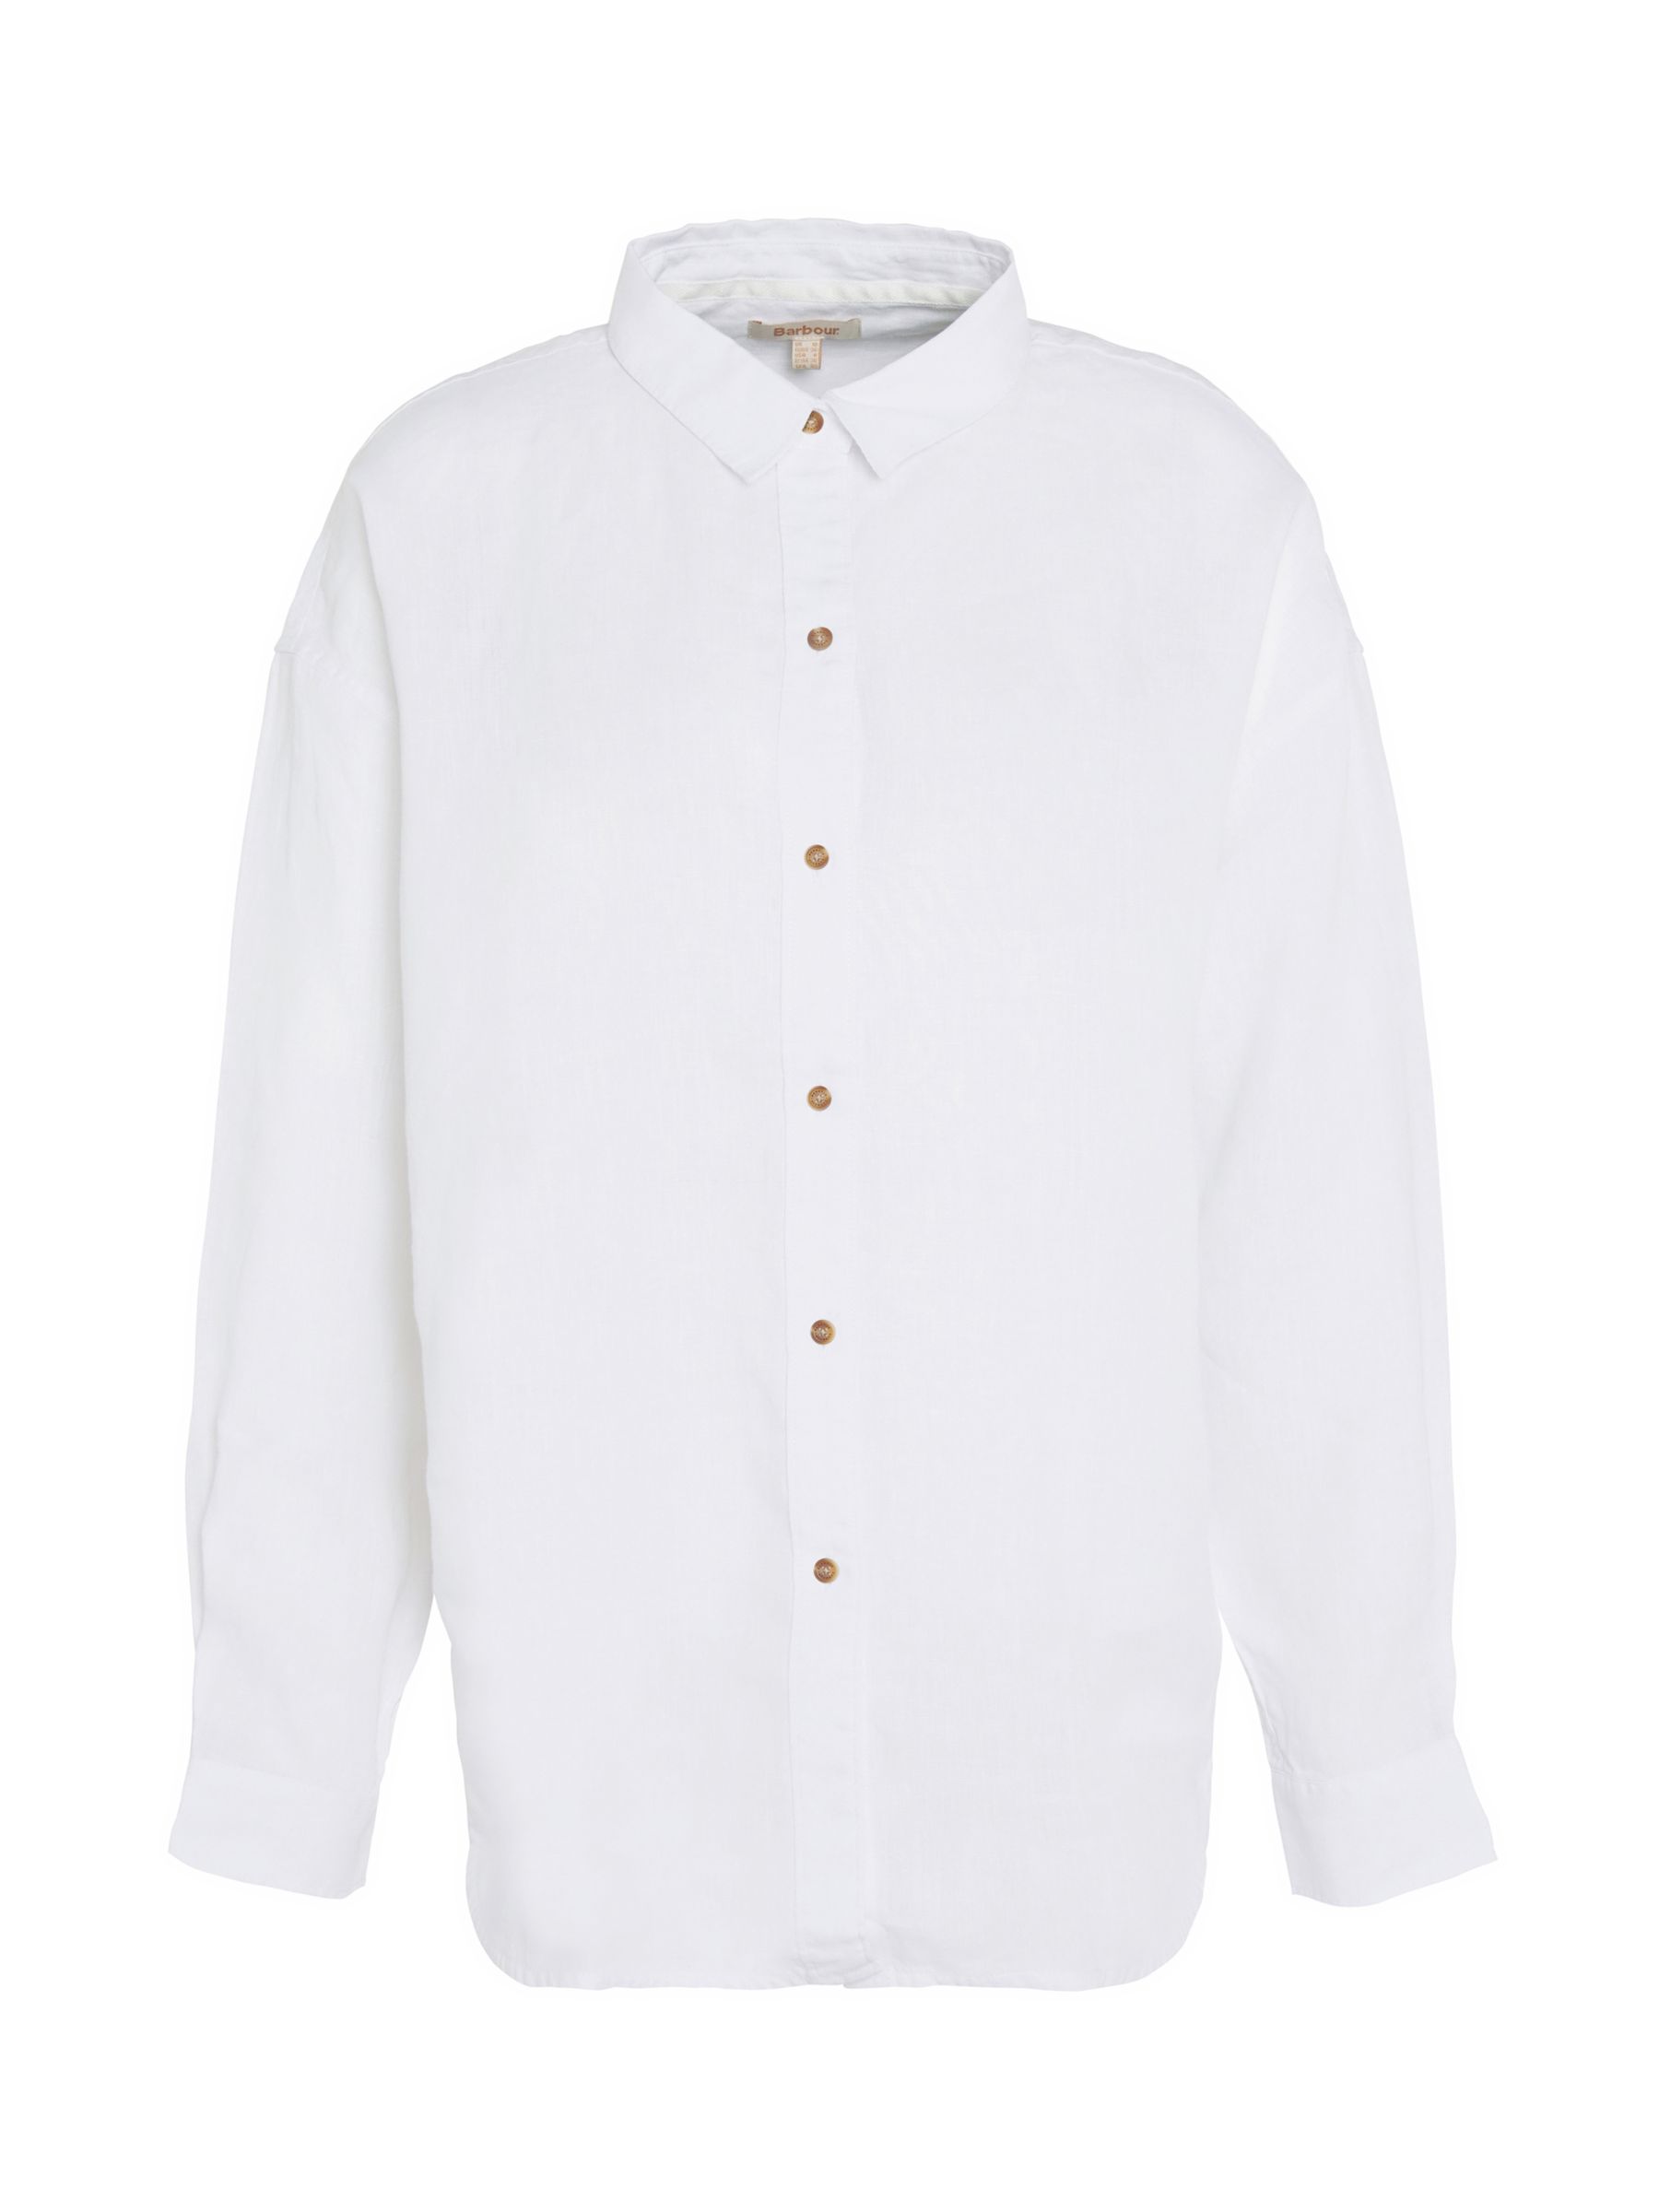 Barbour Hampton Linen Shirt, White at John Lewis & Partners